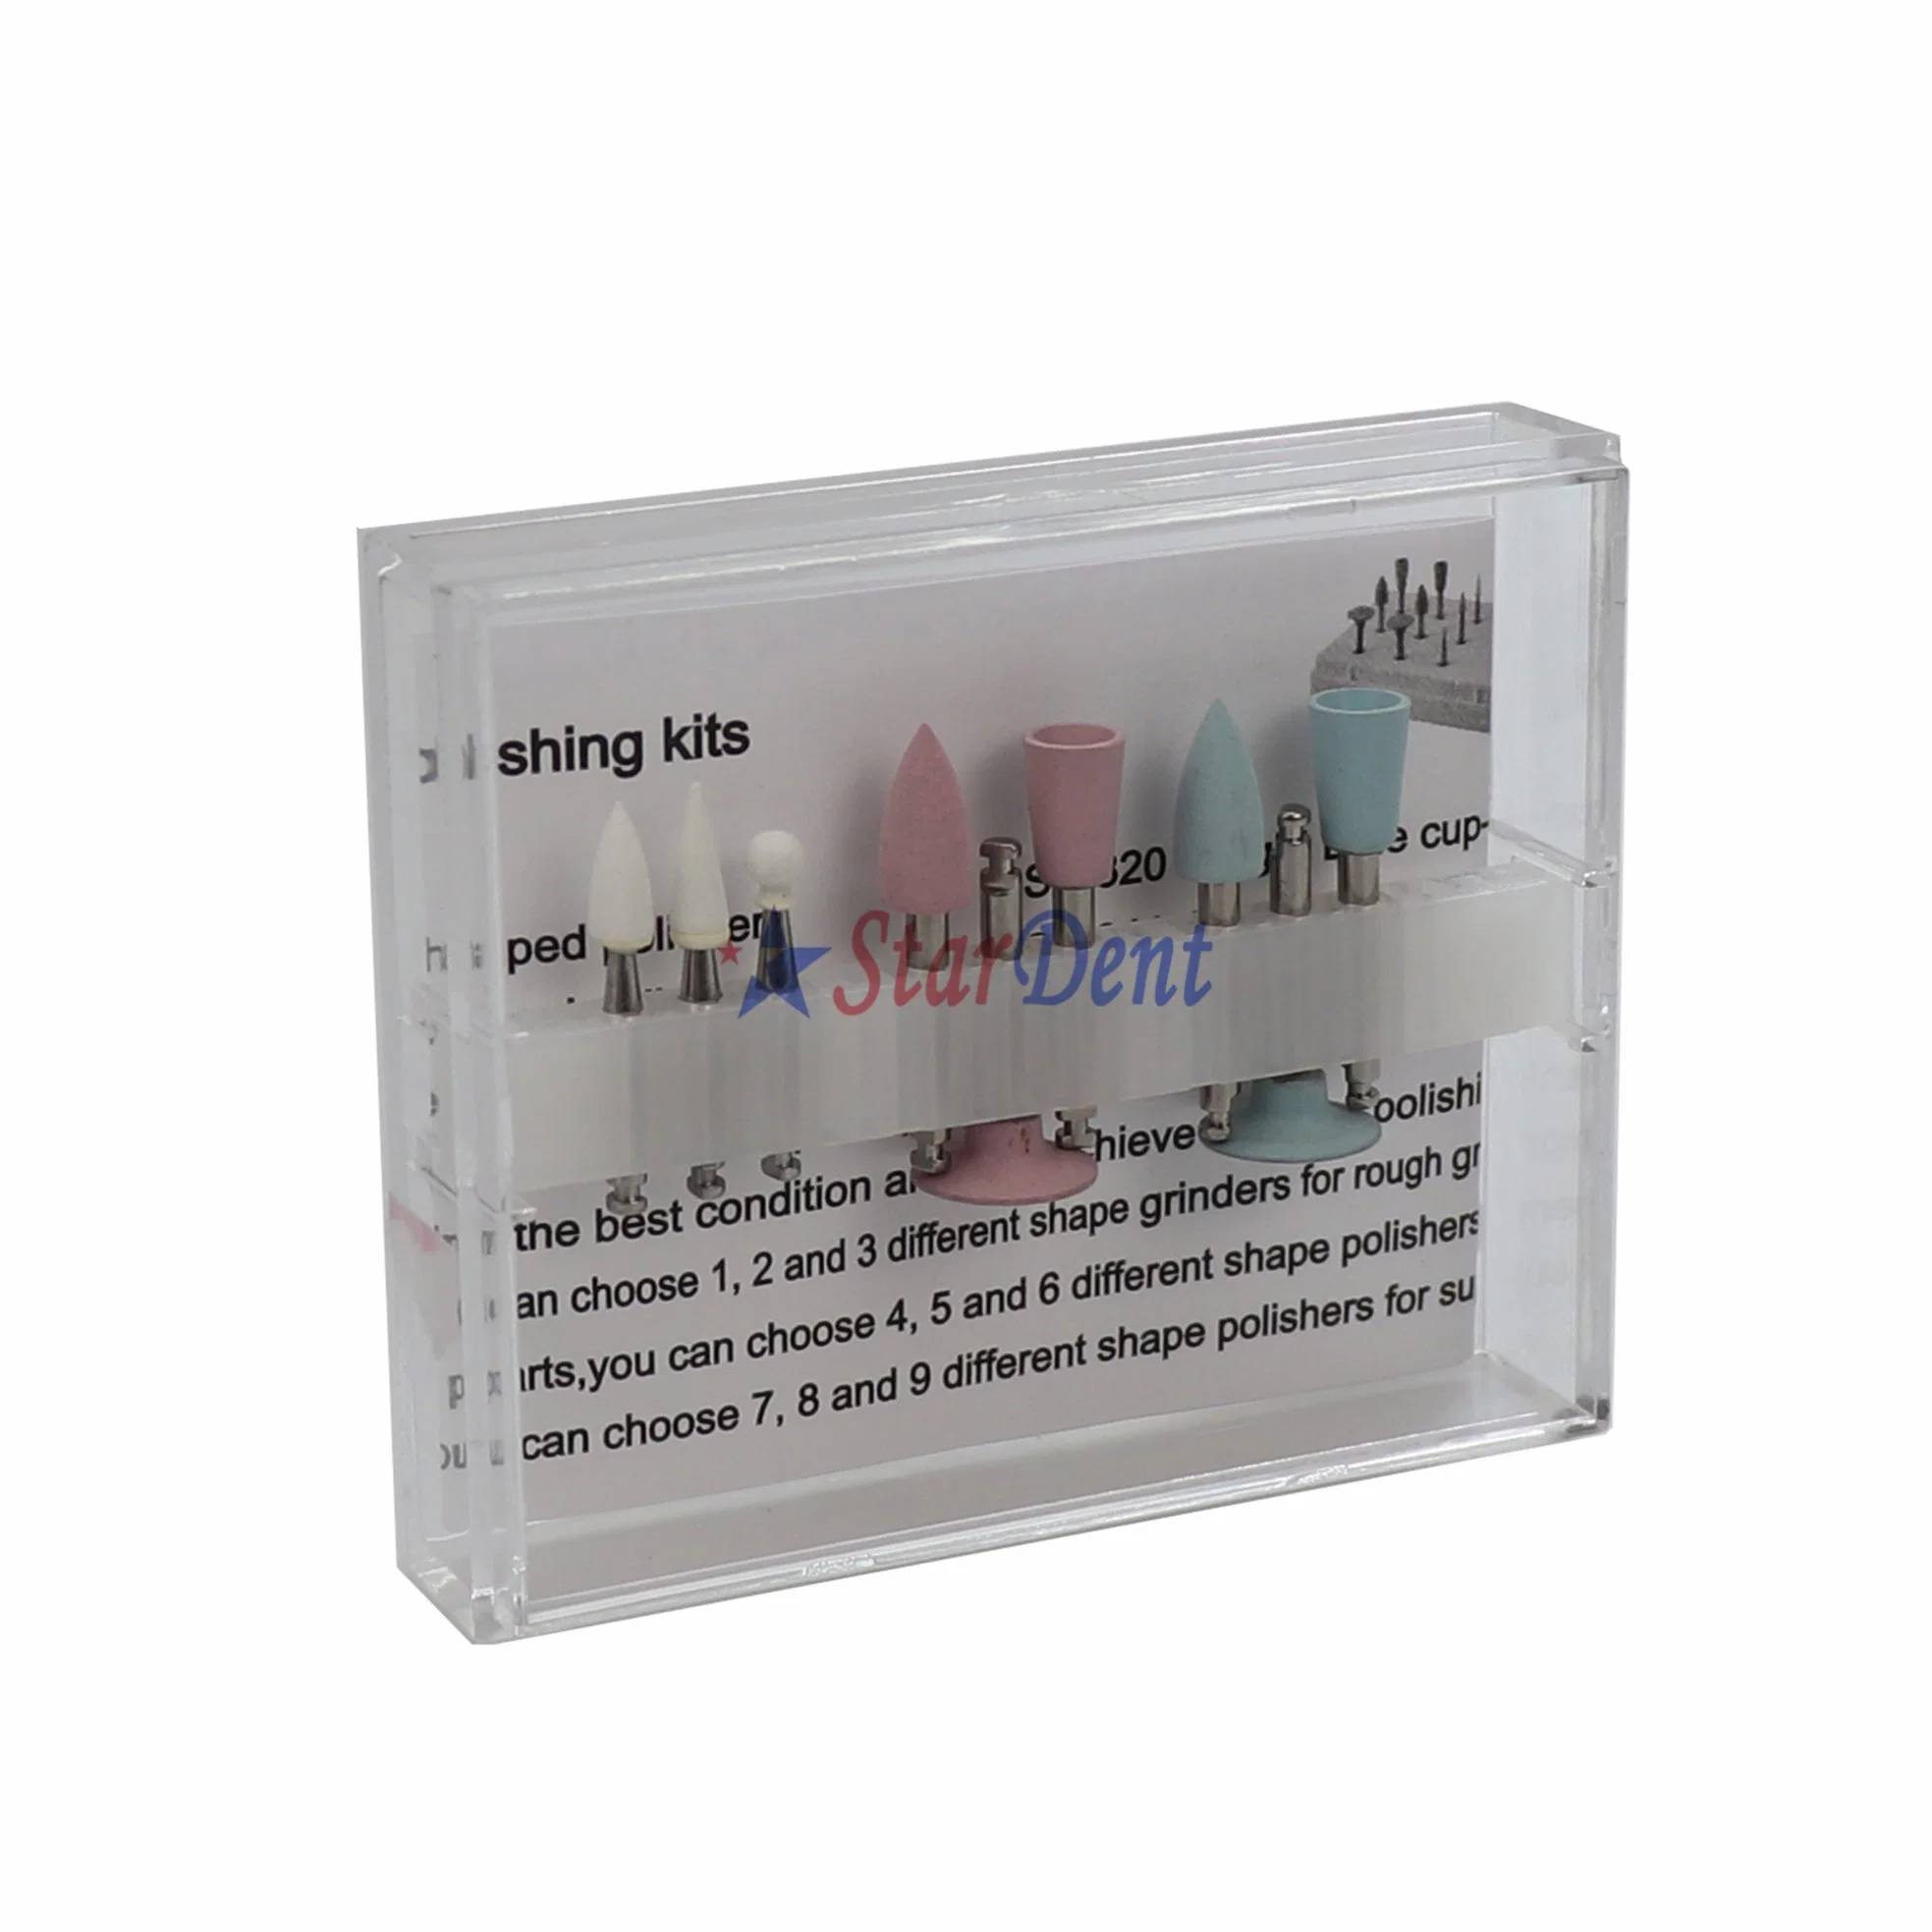 Dental Supply Rubber Polishing Composite Burs Kit Hospital Medical Lab Surgical Diagnostic Dentist Clinic Equipment